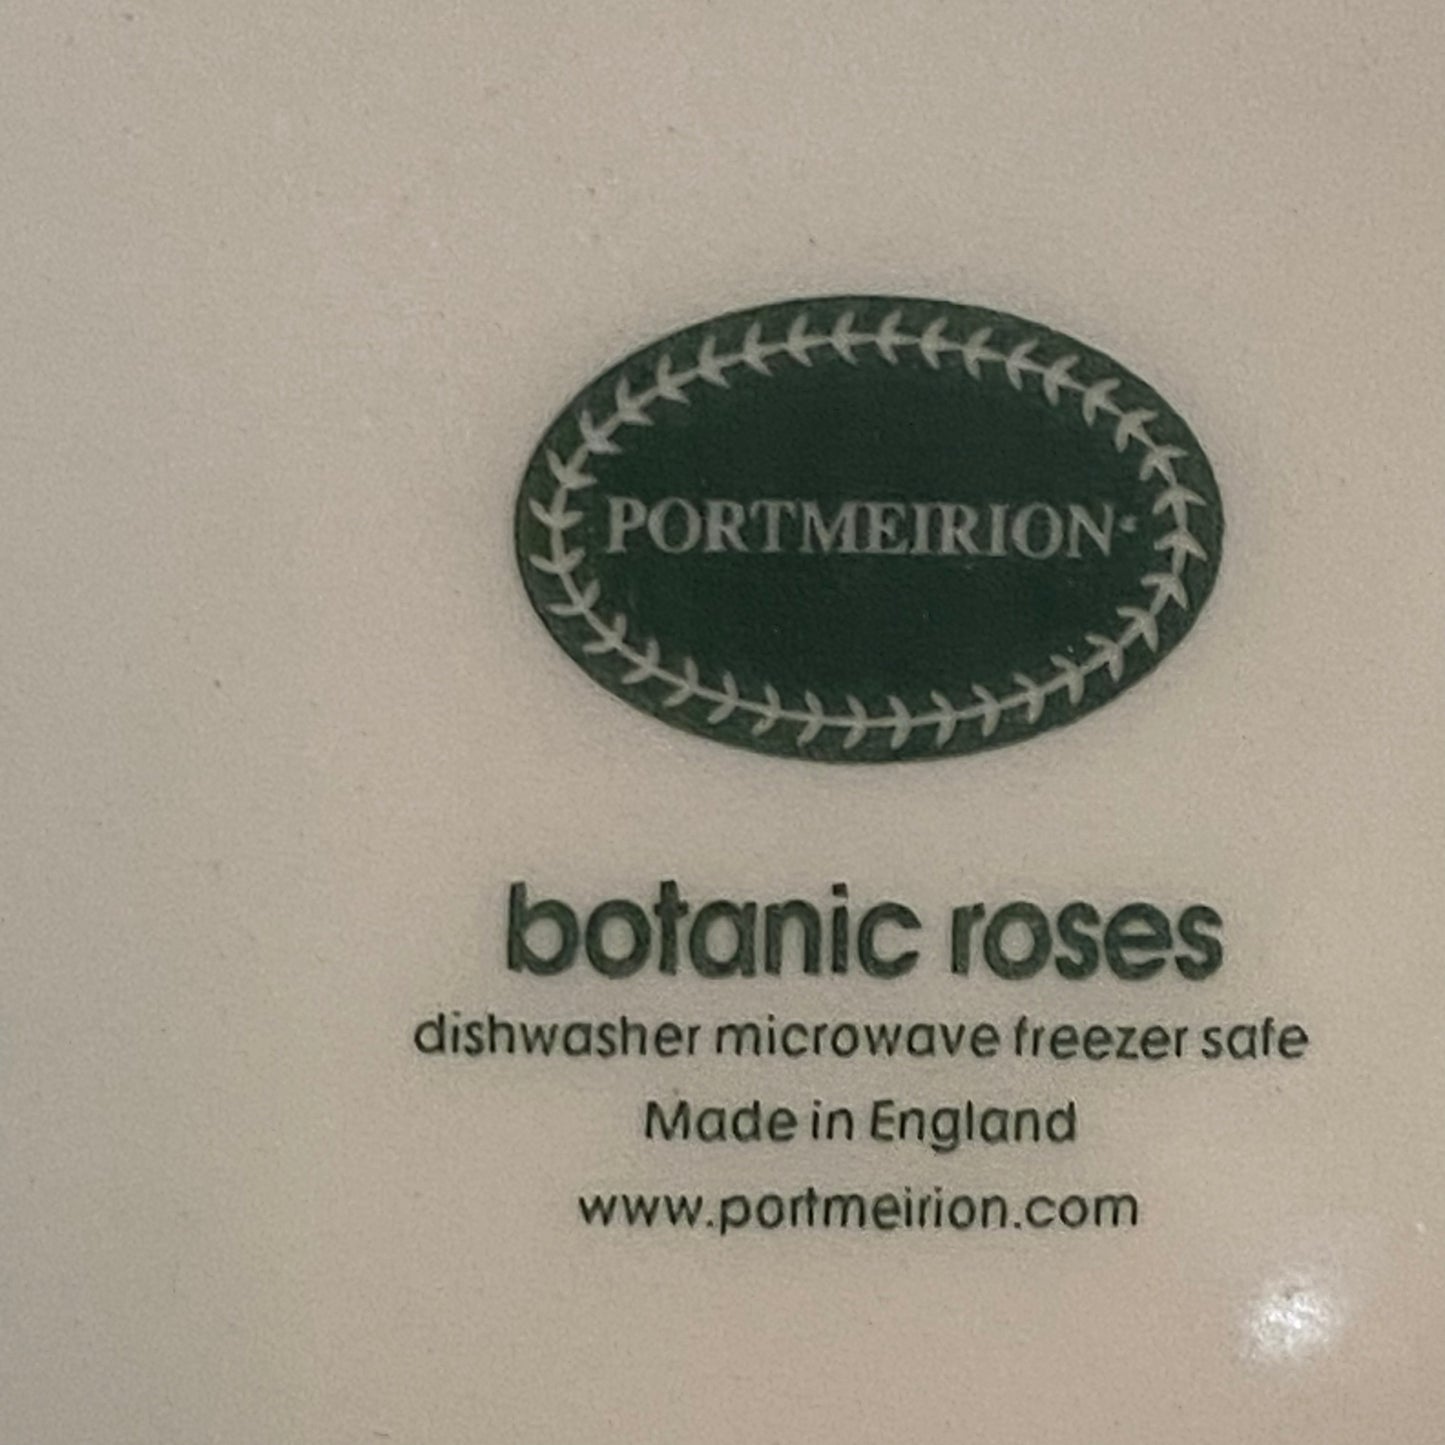 Set of two Portmeirion of England “the botanical gardens” dinner  plates